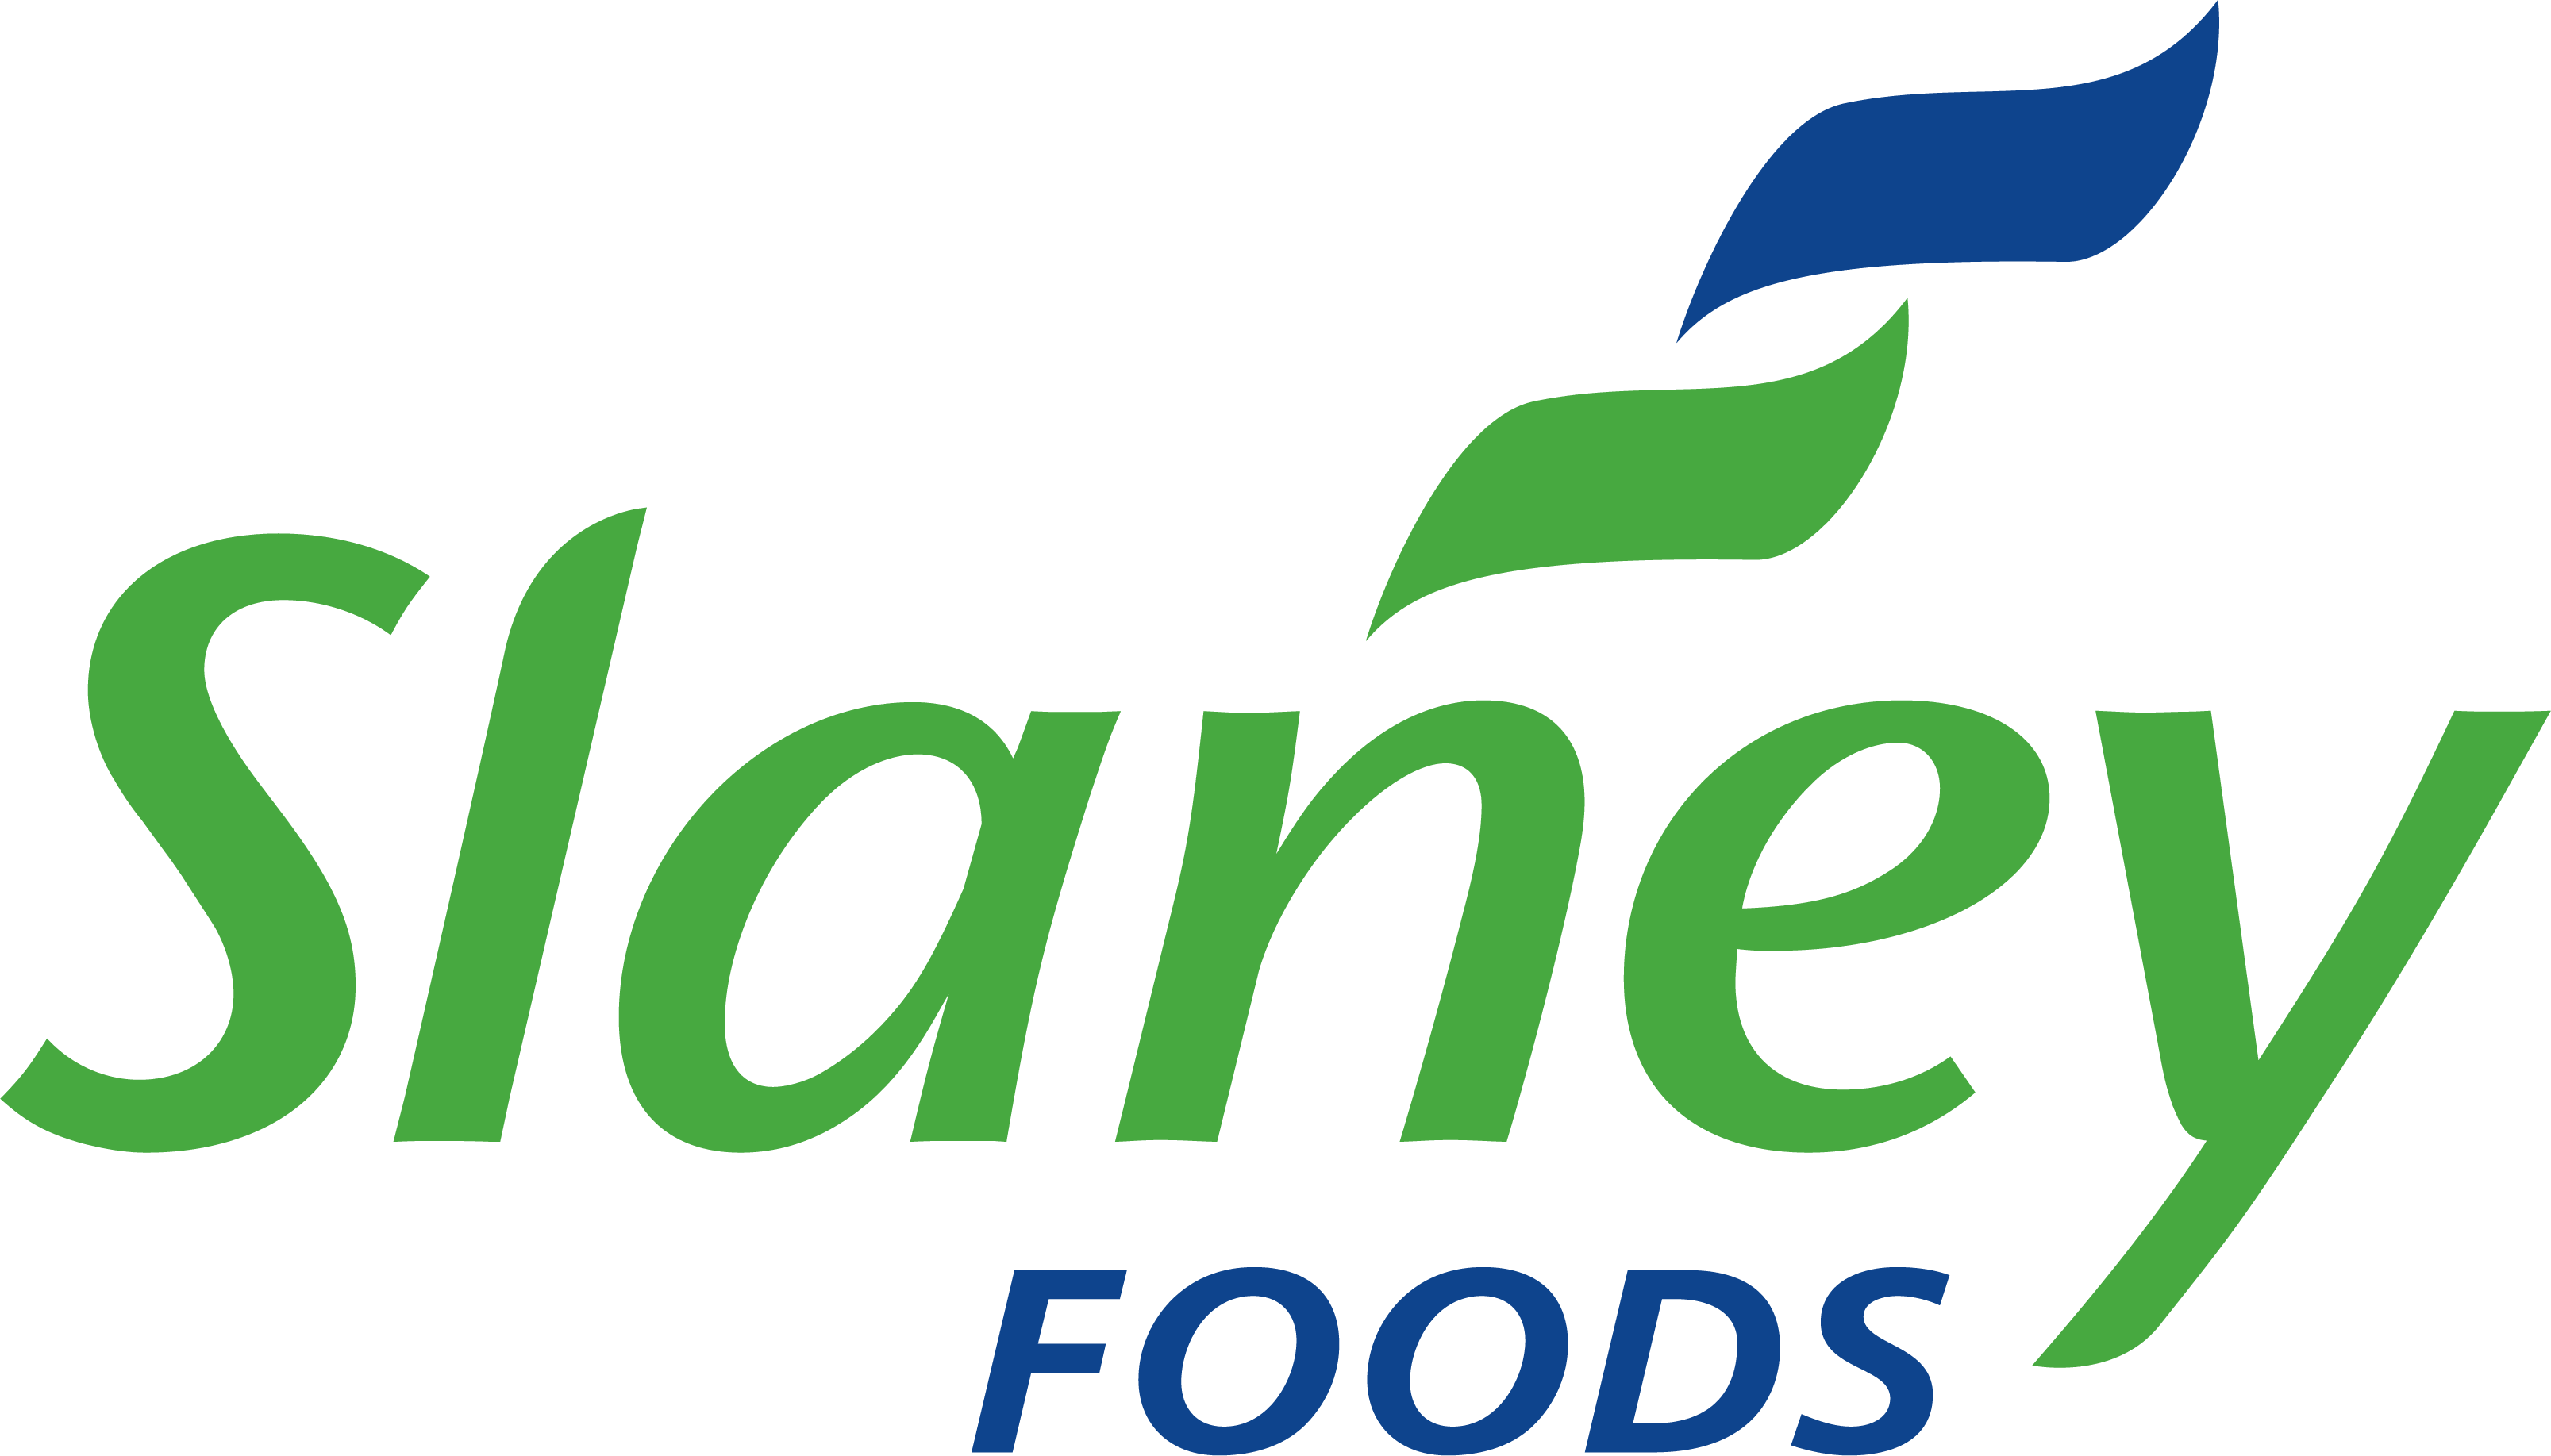 Slaney Foods International logo